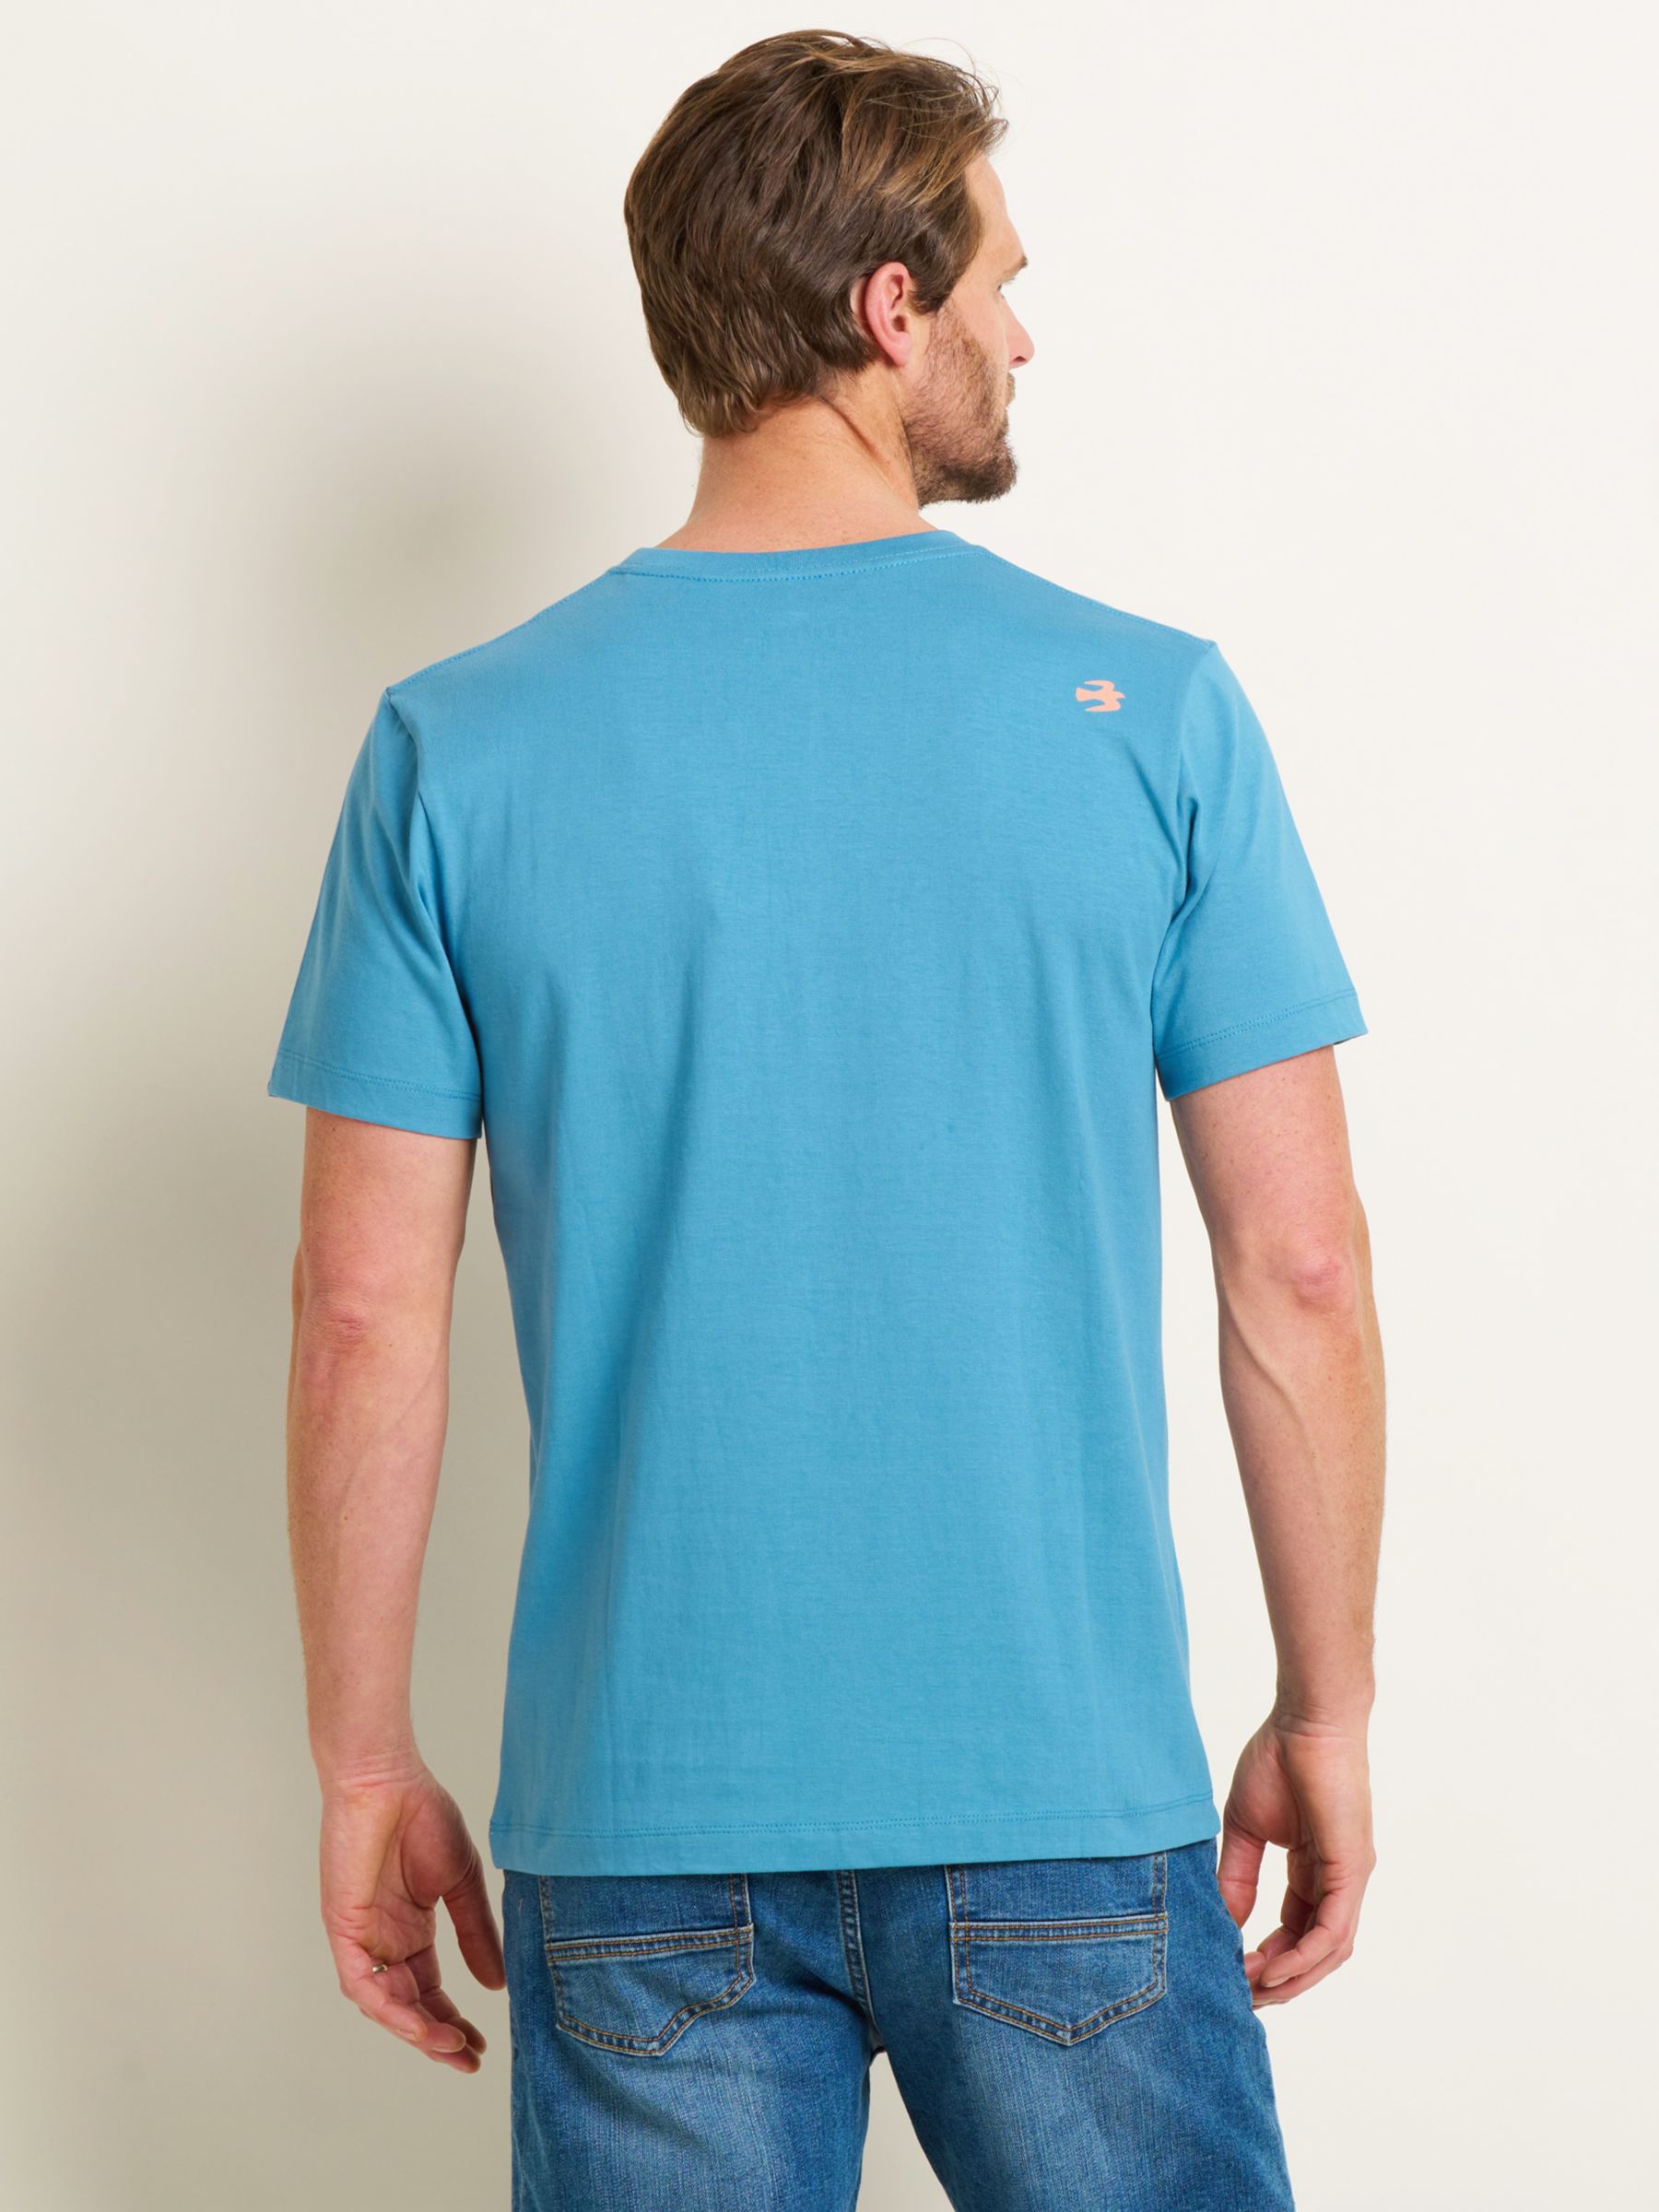 Brakeburn Old Harry Cotton T-Shirt, Blue/Multi, S